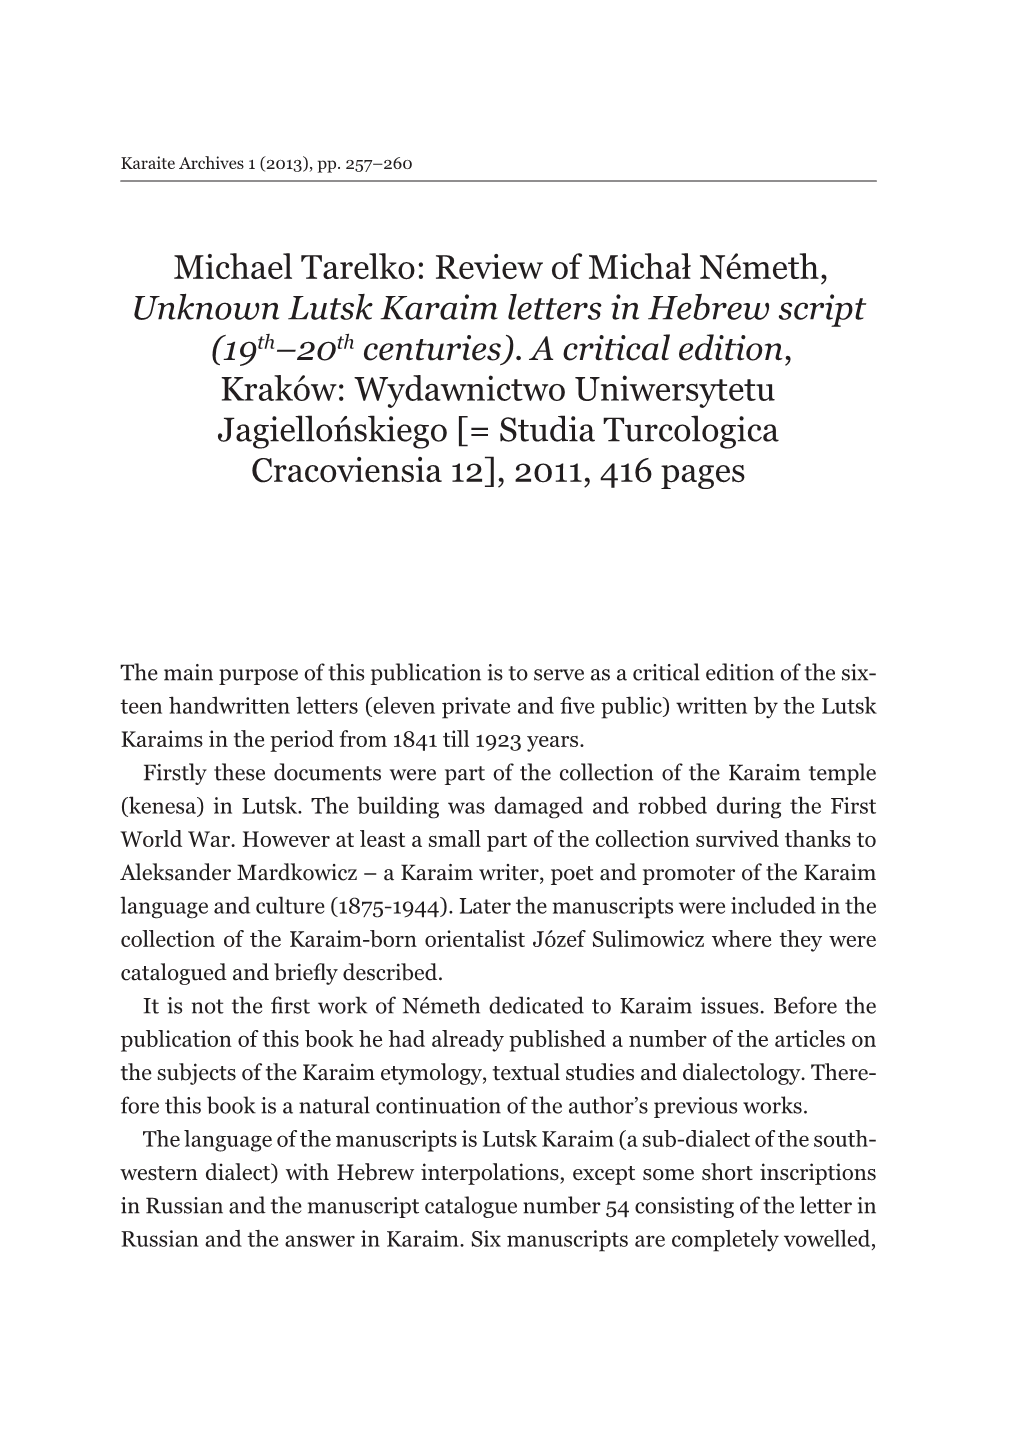 Michael Tarelko: Review of Michał Németh, Unknown Lutsk Karaim Letters in Hebrew Script (19Th–20Th Centuries)